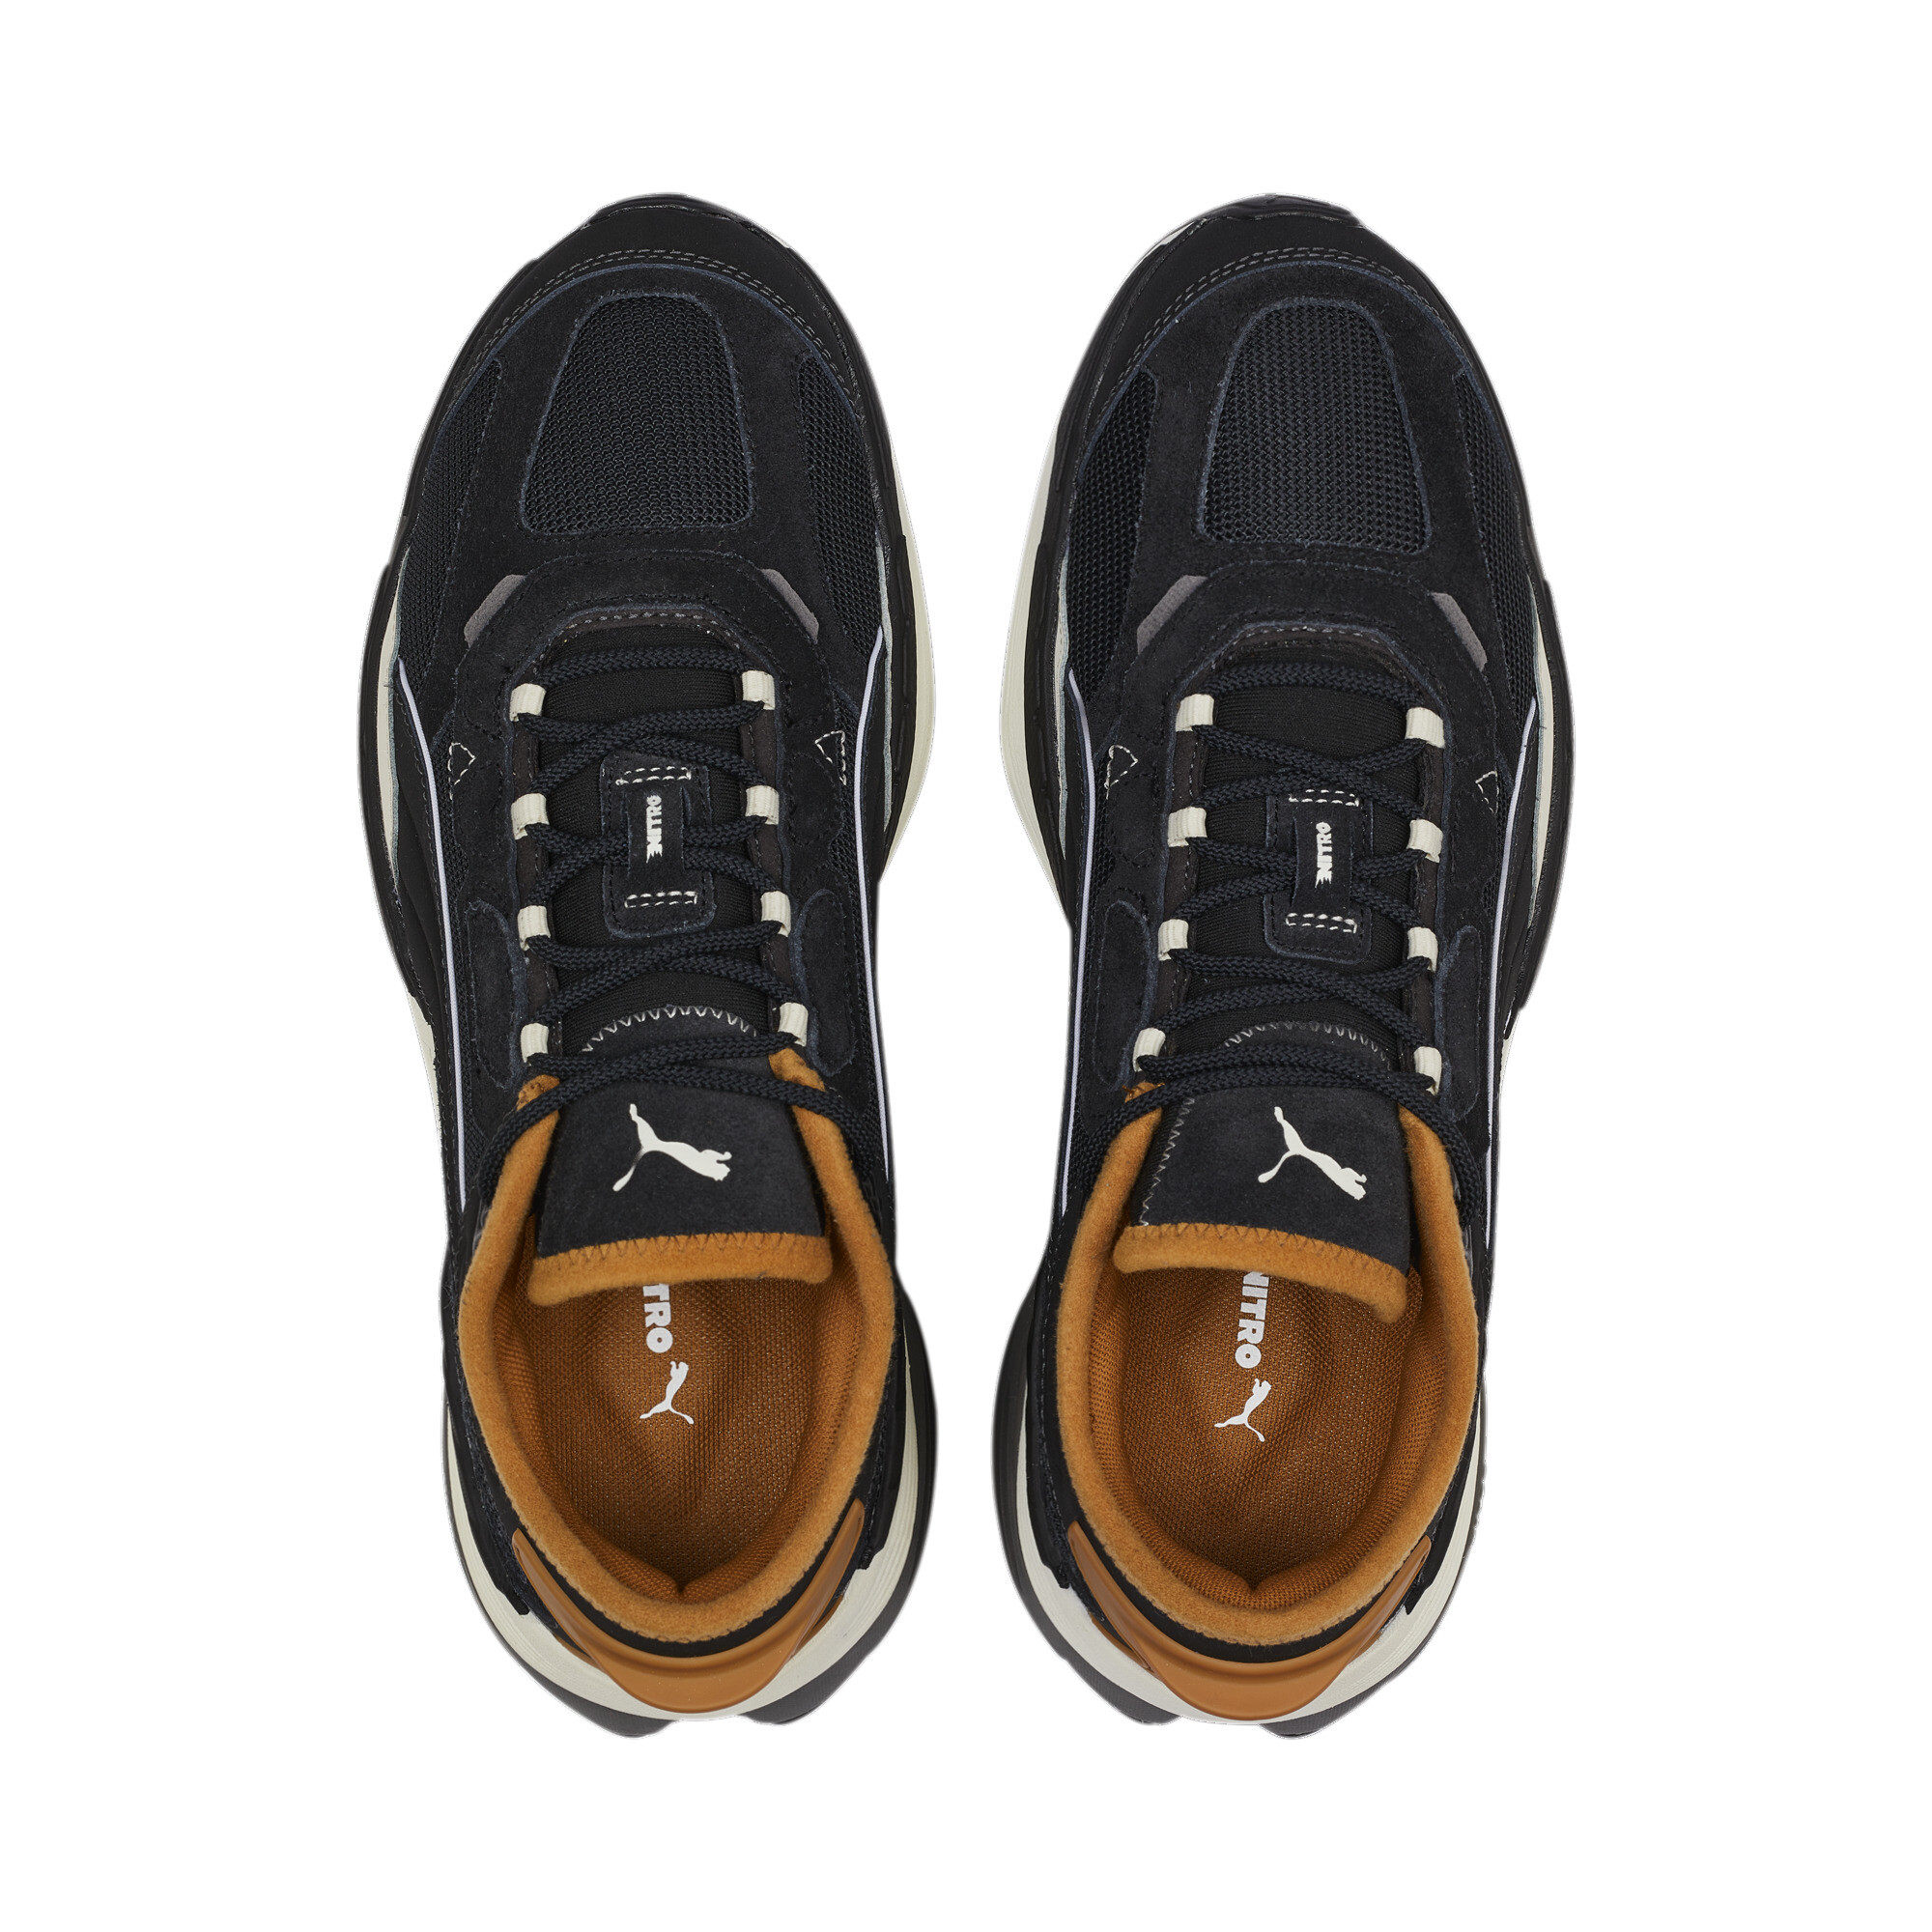 Men's PUMA Extent Nitro Heritage Sneakers In Black, Size EU 42